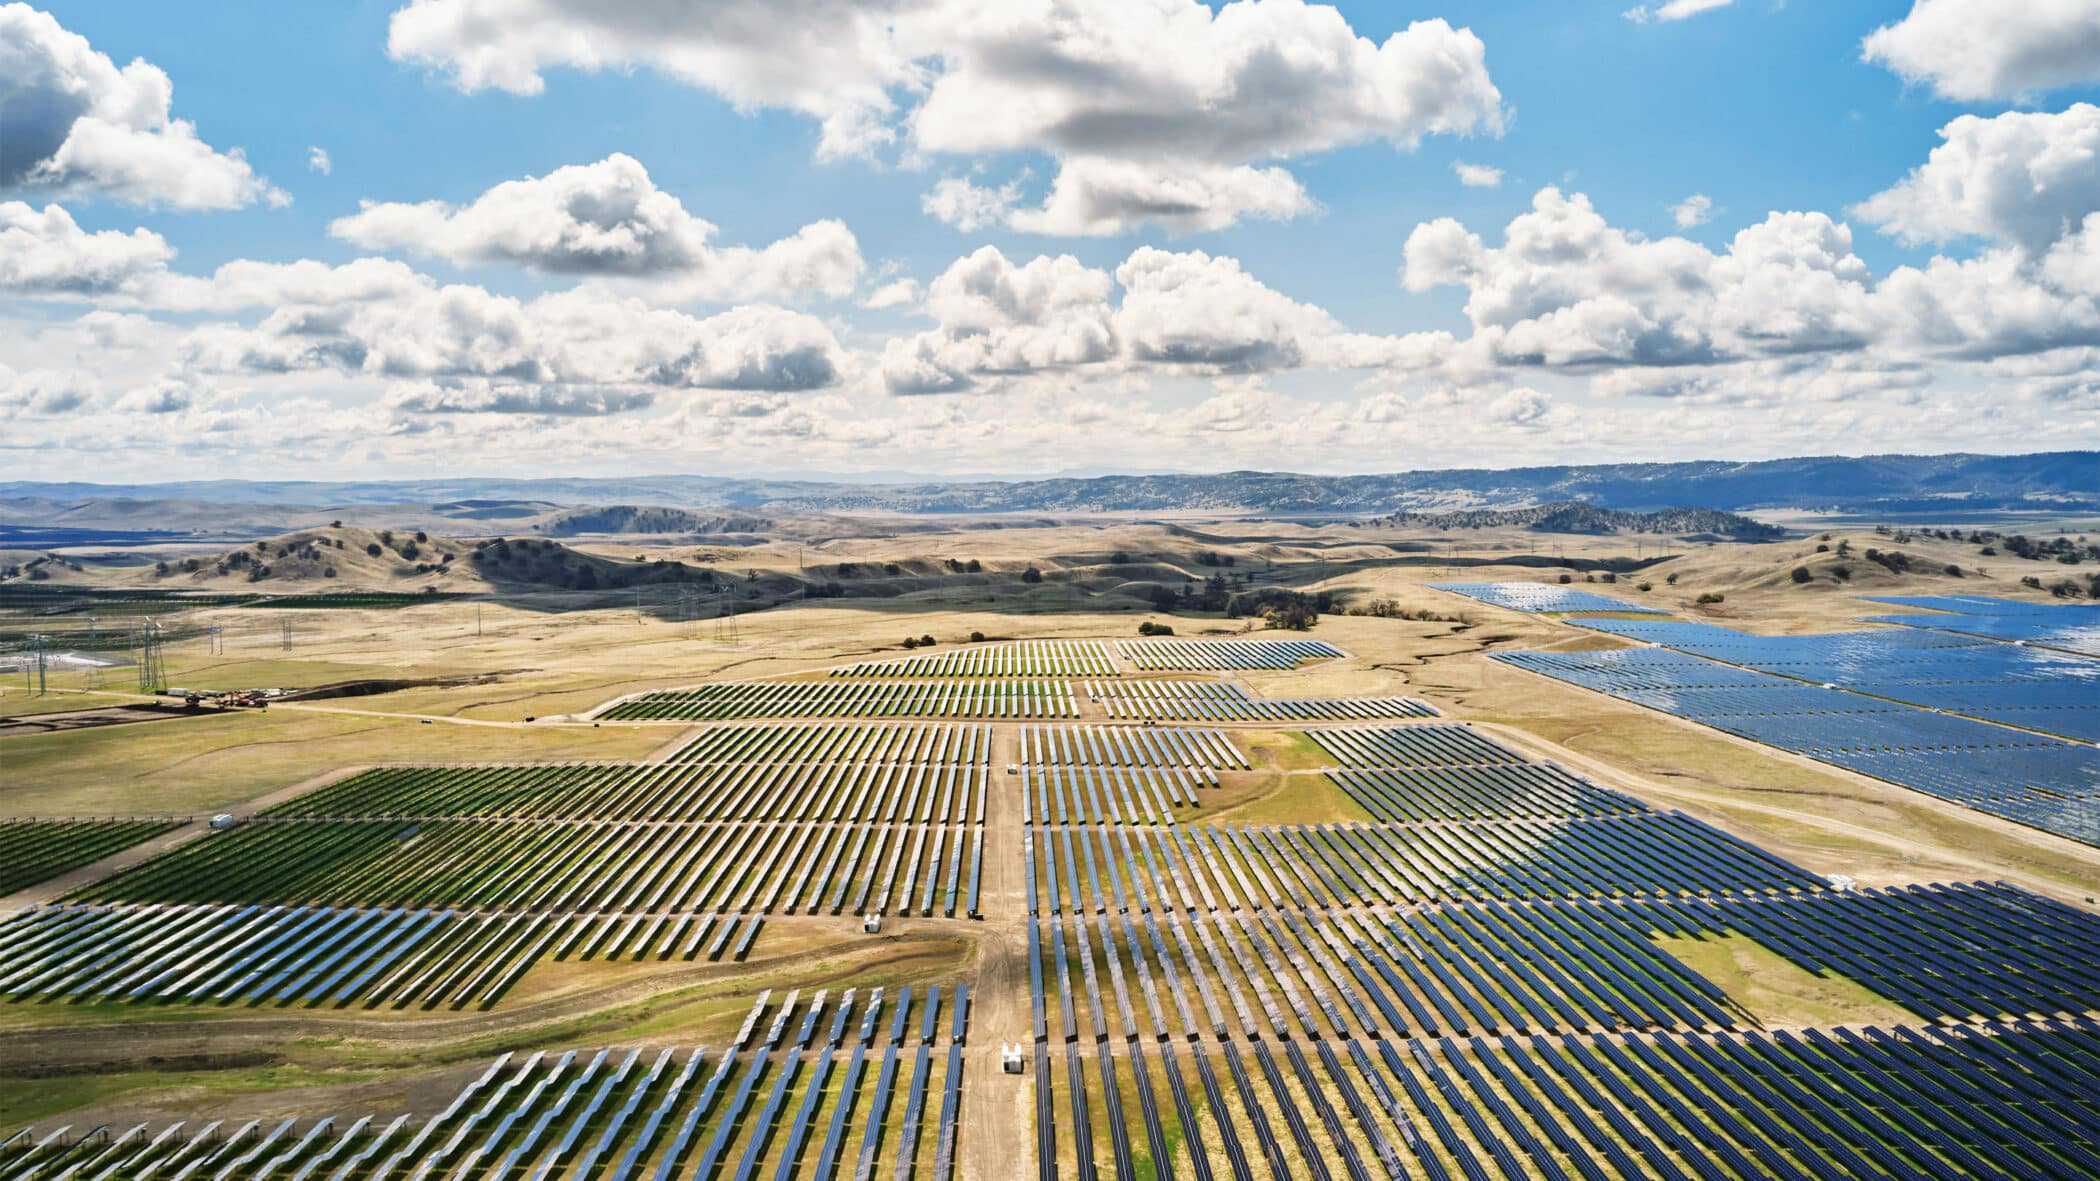 Apple Renewable Energy Cal Flats Solar project in Monterrey